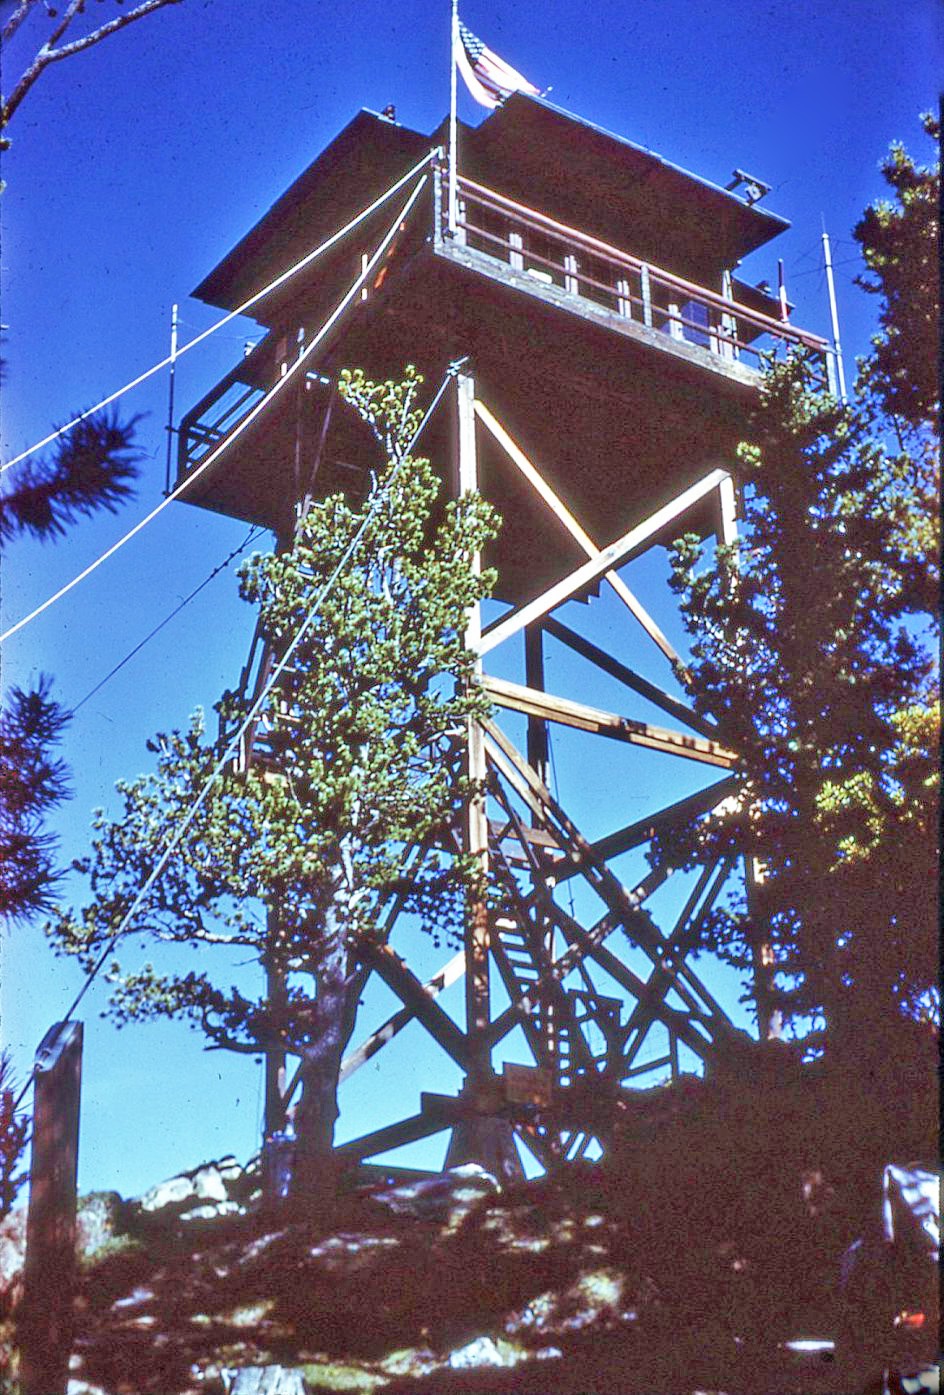 White Pine Lookout, original location